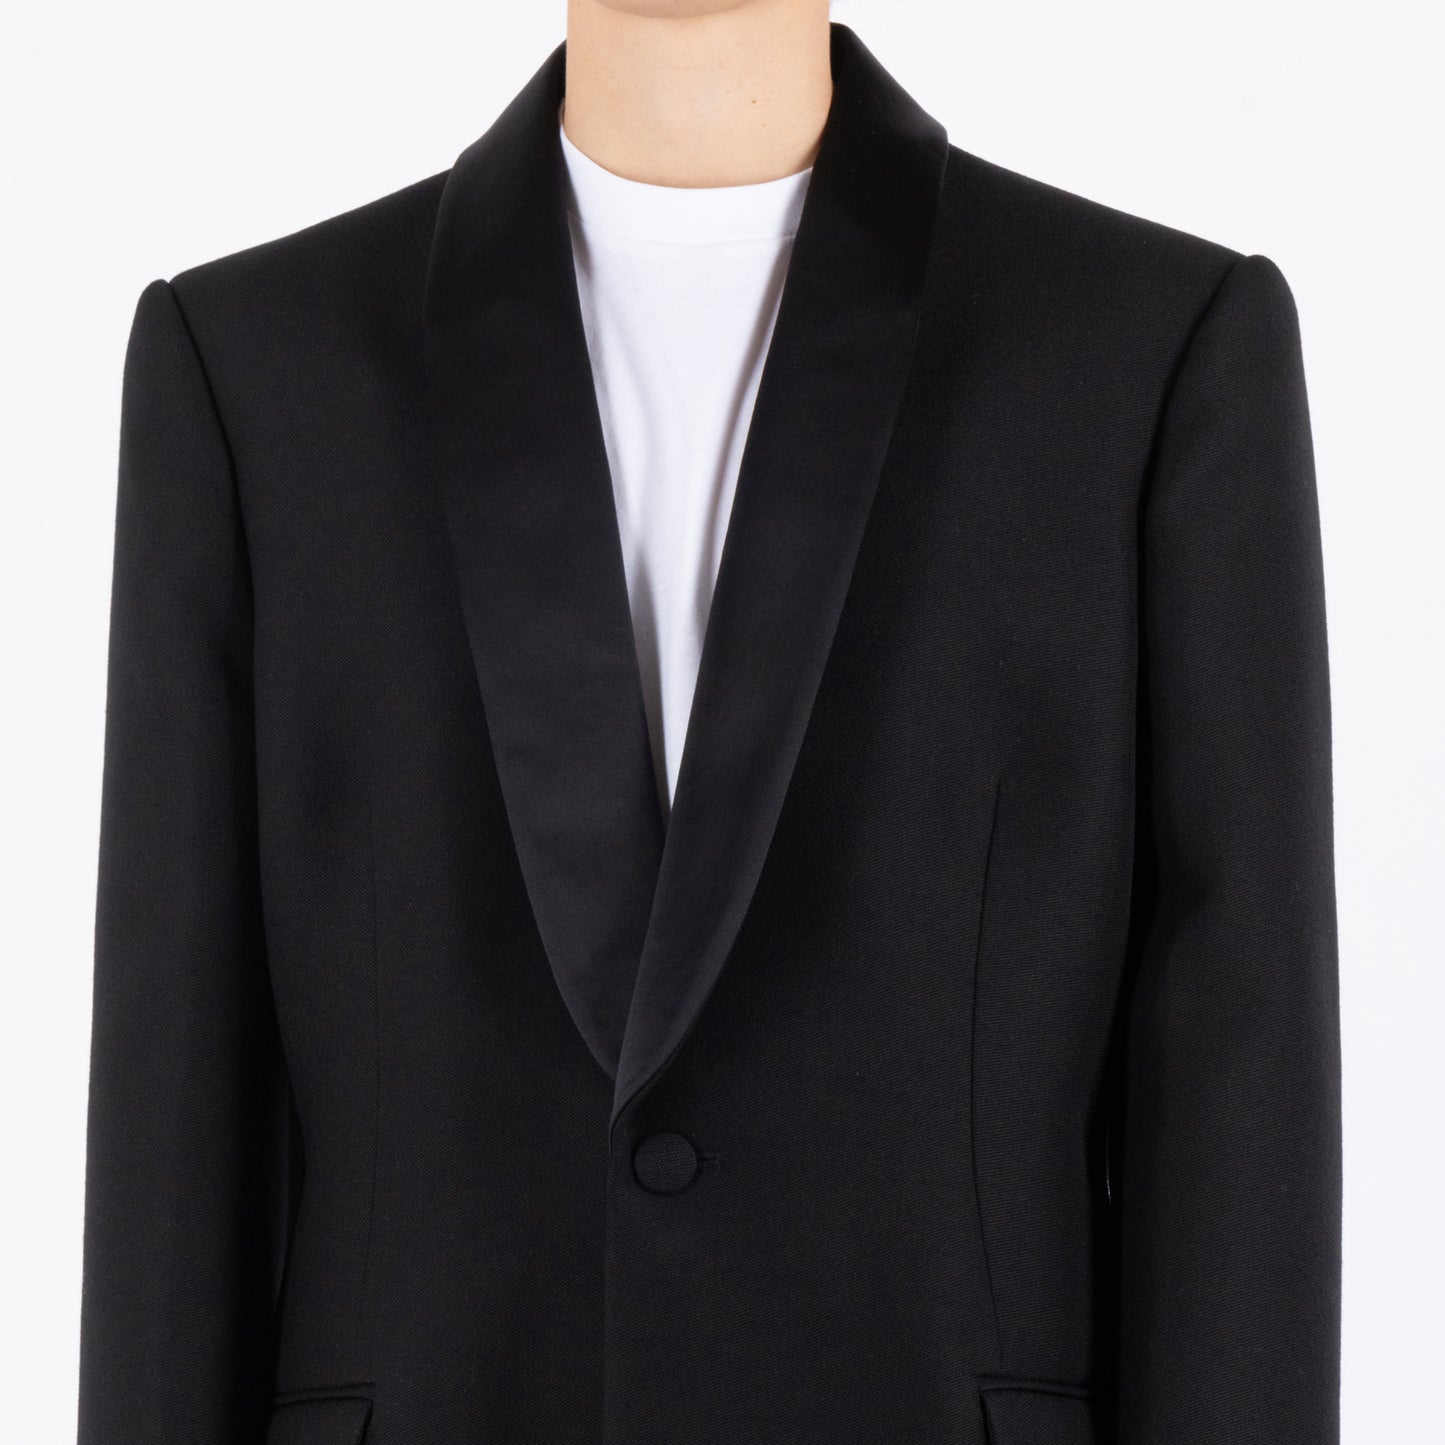 Women's Wardrobe Tuxedo Jacket